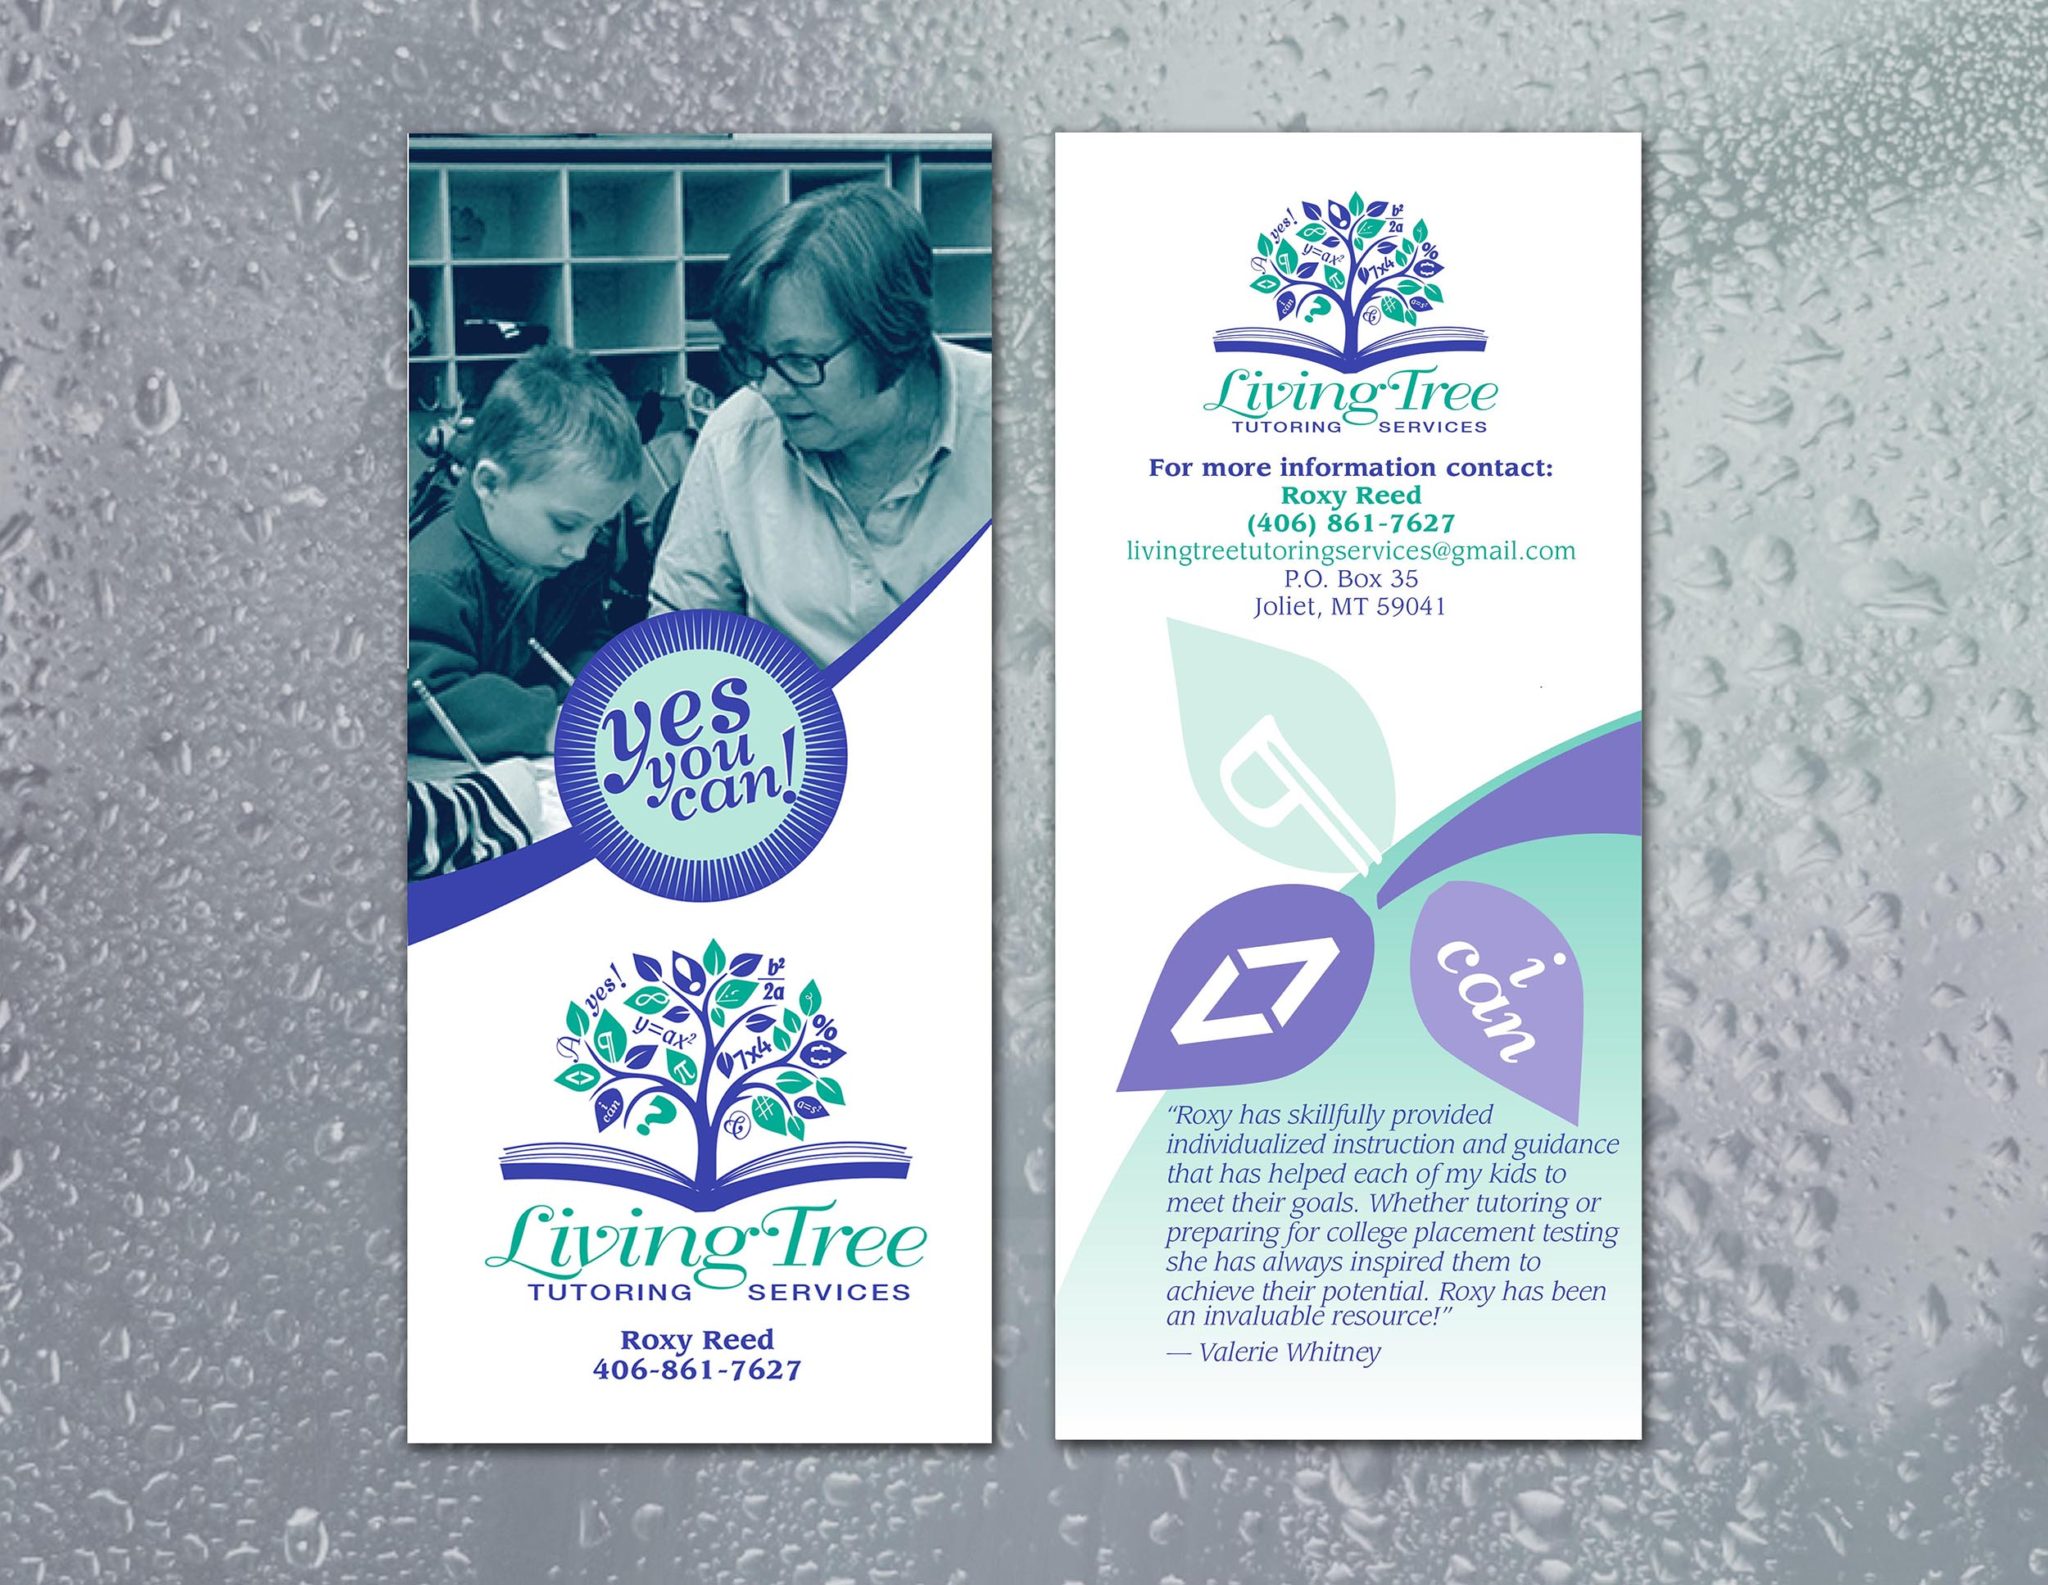 Living Tree Tutoring Services | Bifold Brochure